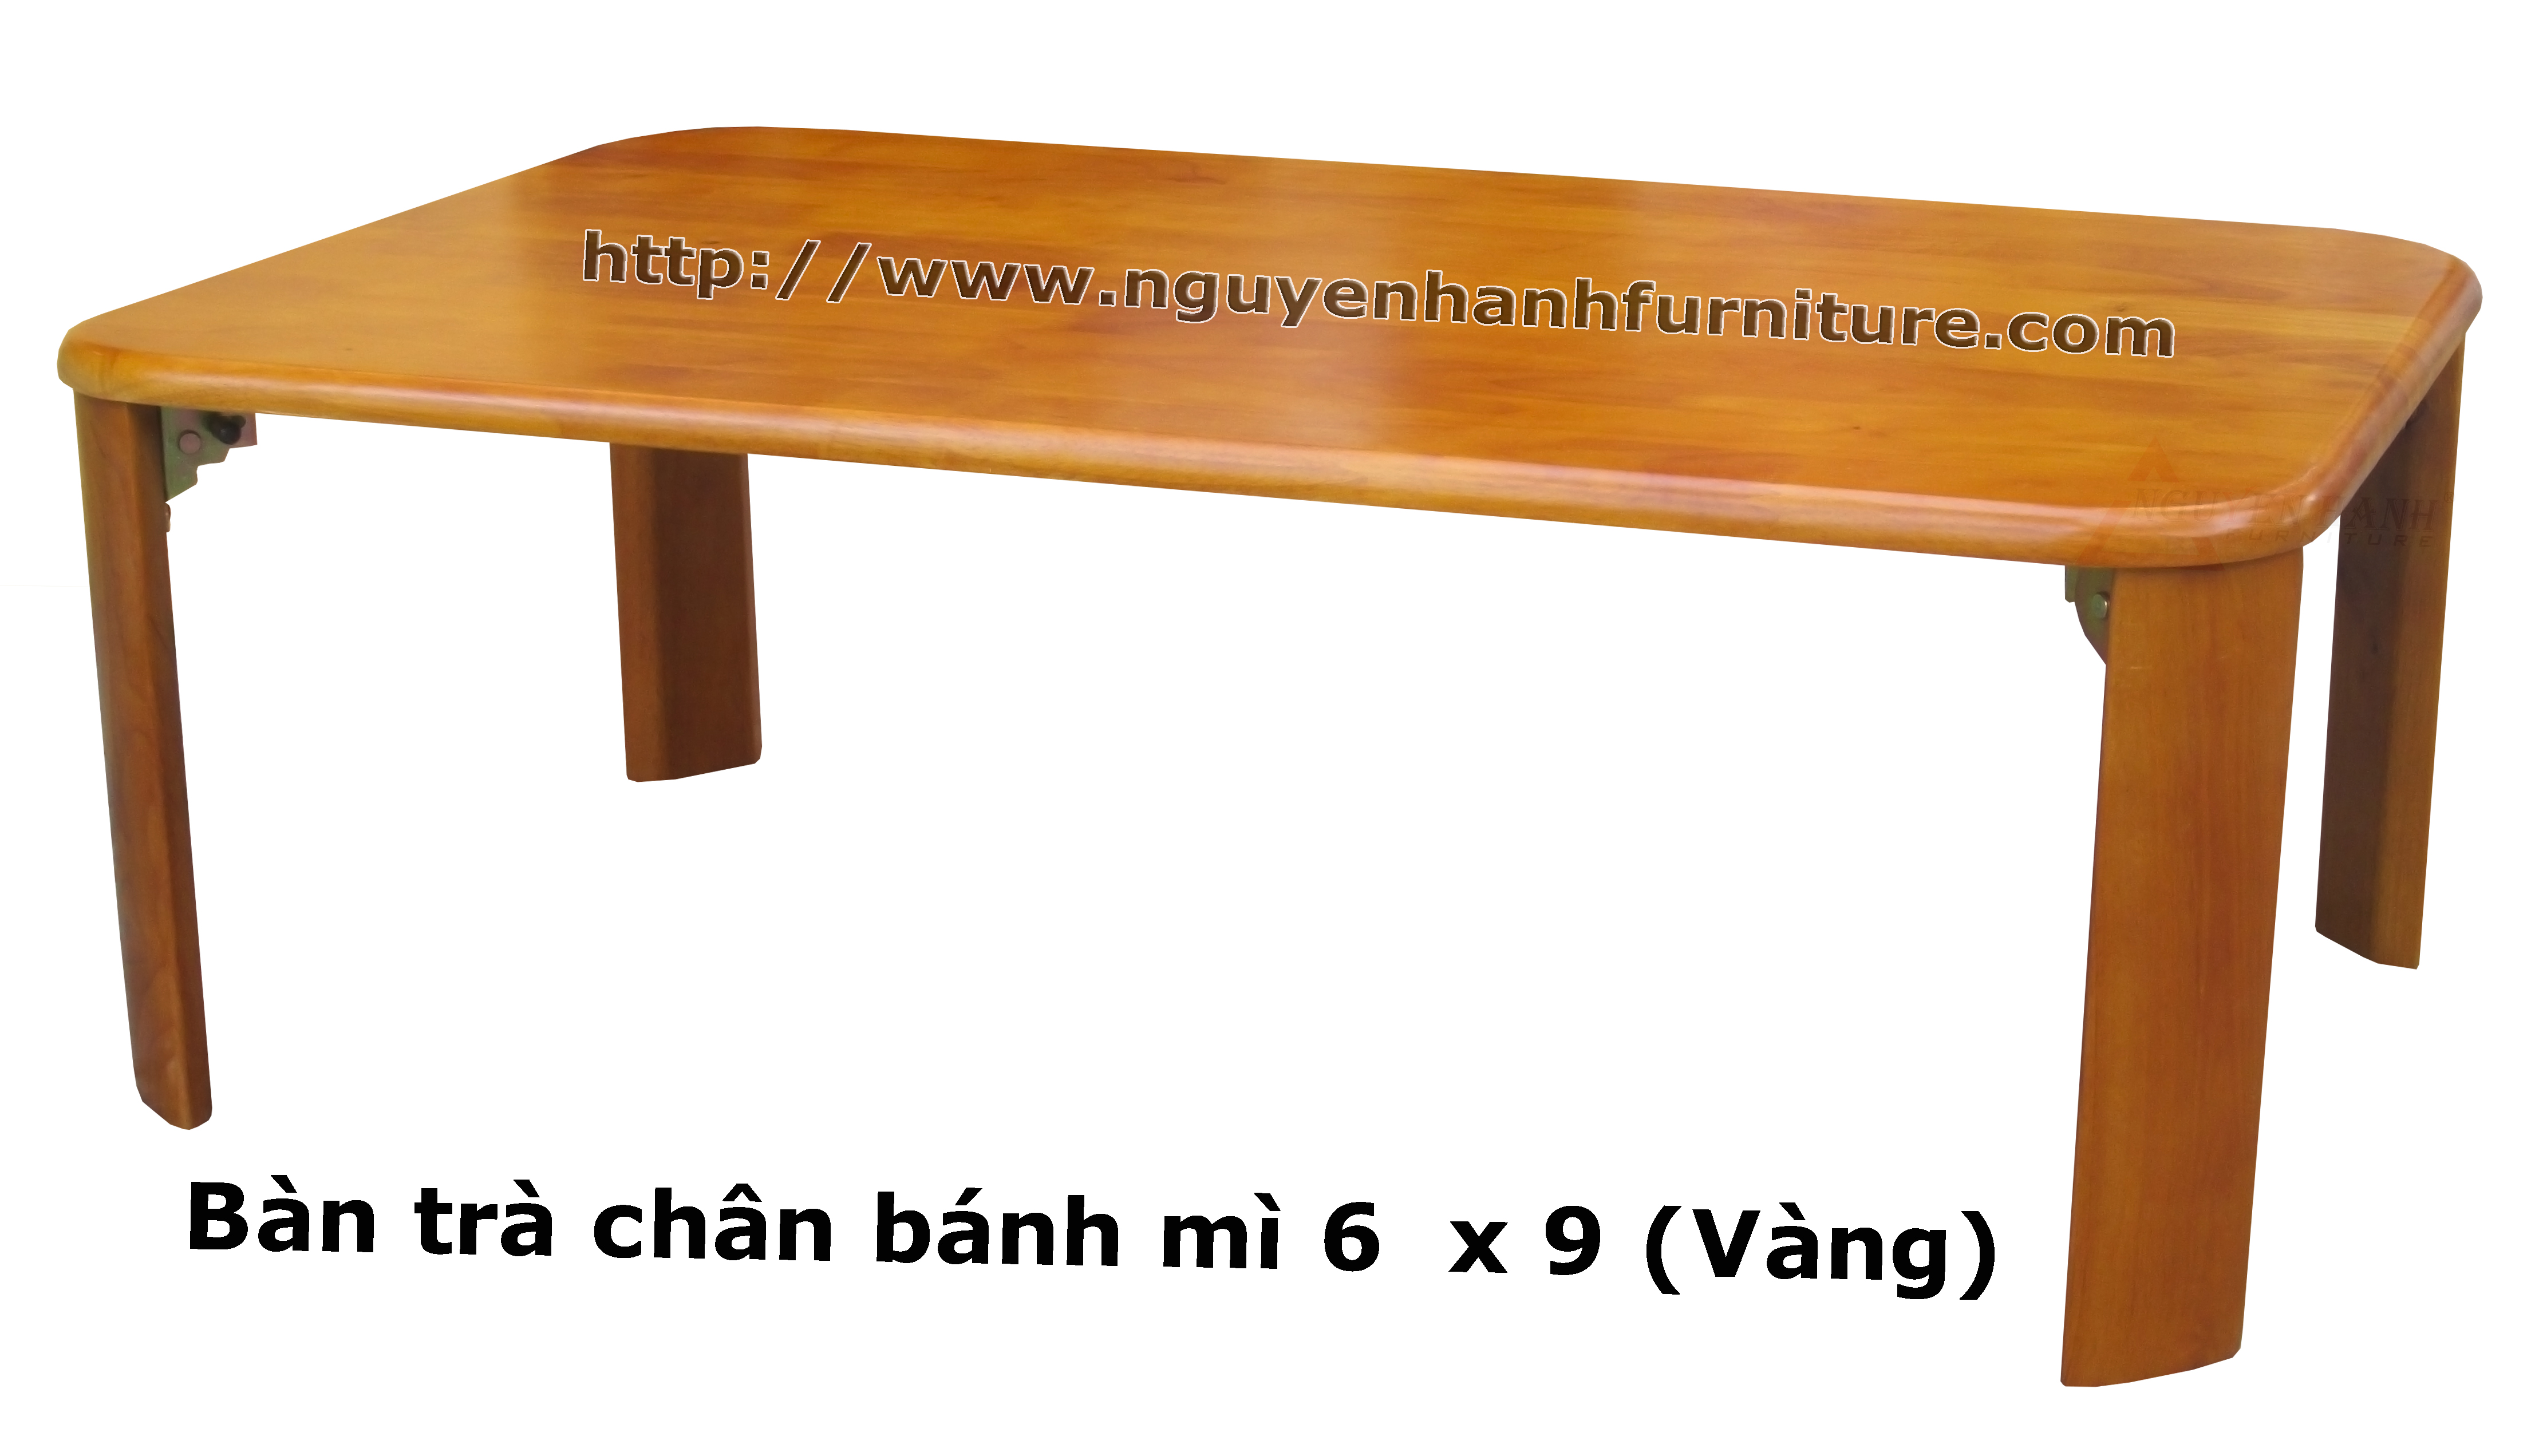 Name product: 6 x 9 Bread shape Tea table (Yellow) - Dimensions: 60 x 90 x 30 (H) - Description: Wood natural rubber